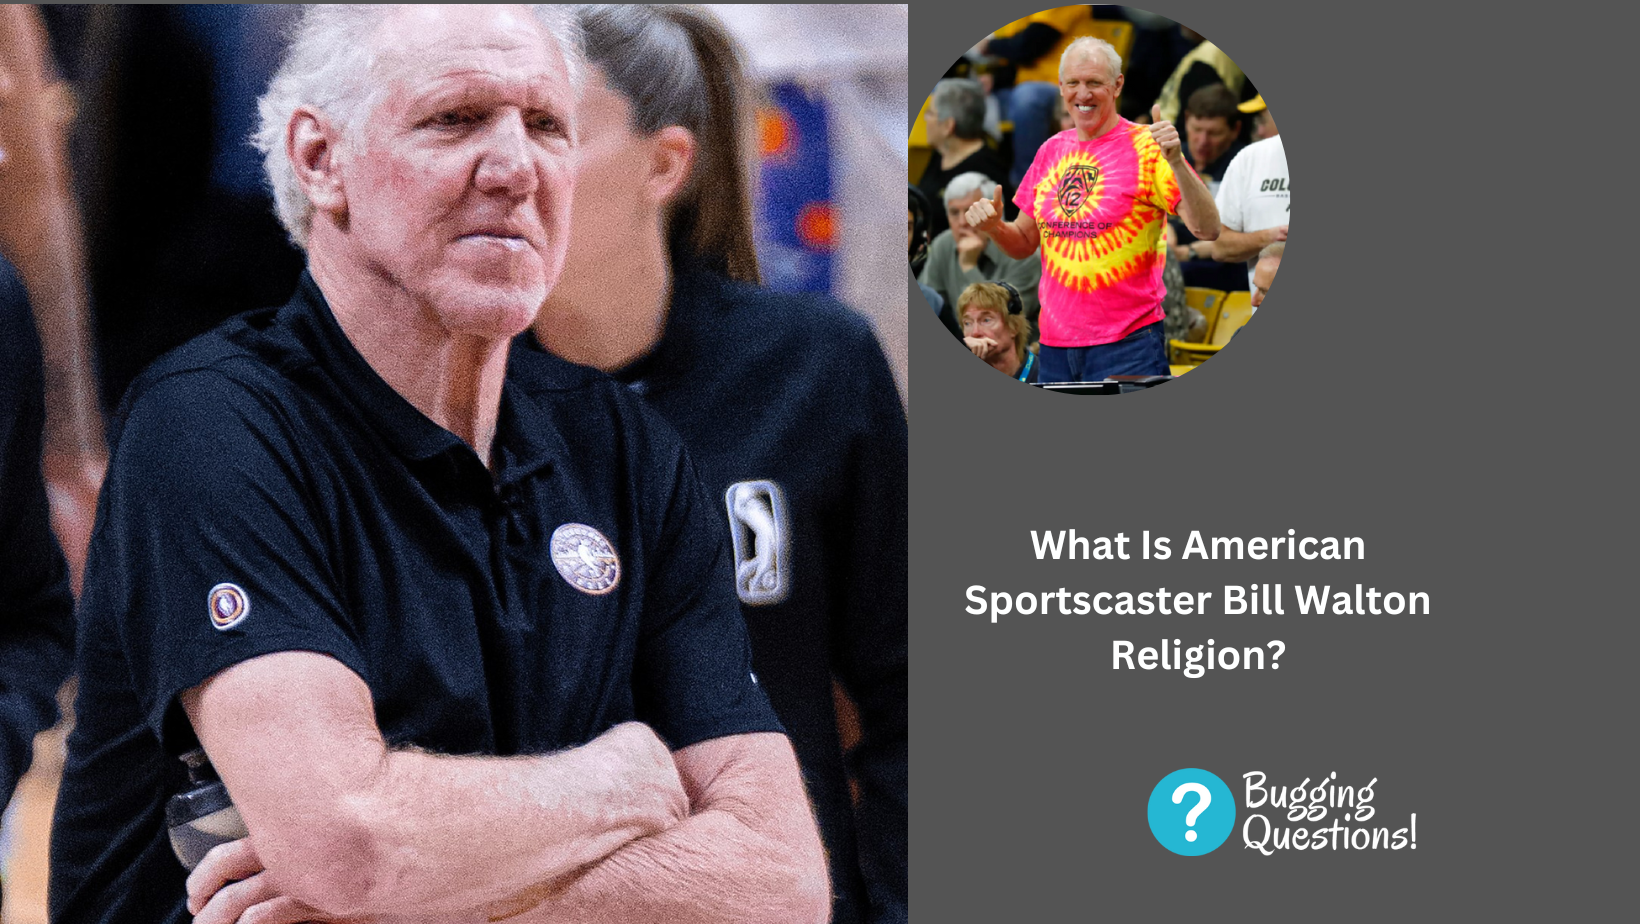 What Is American Sportscaster Bill Walton Religion?